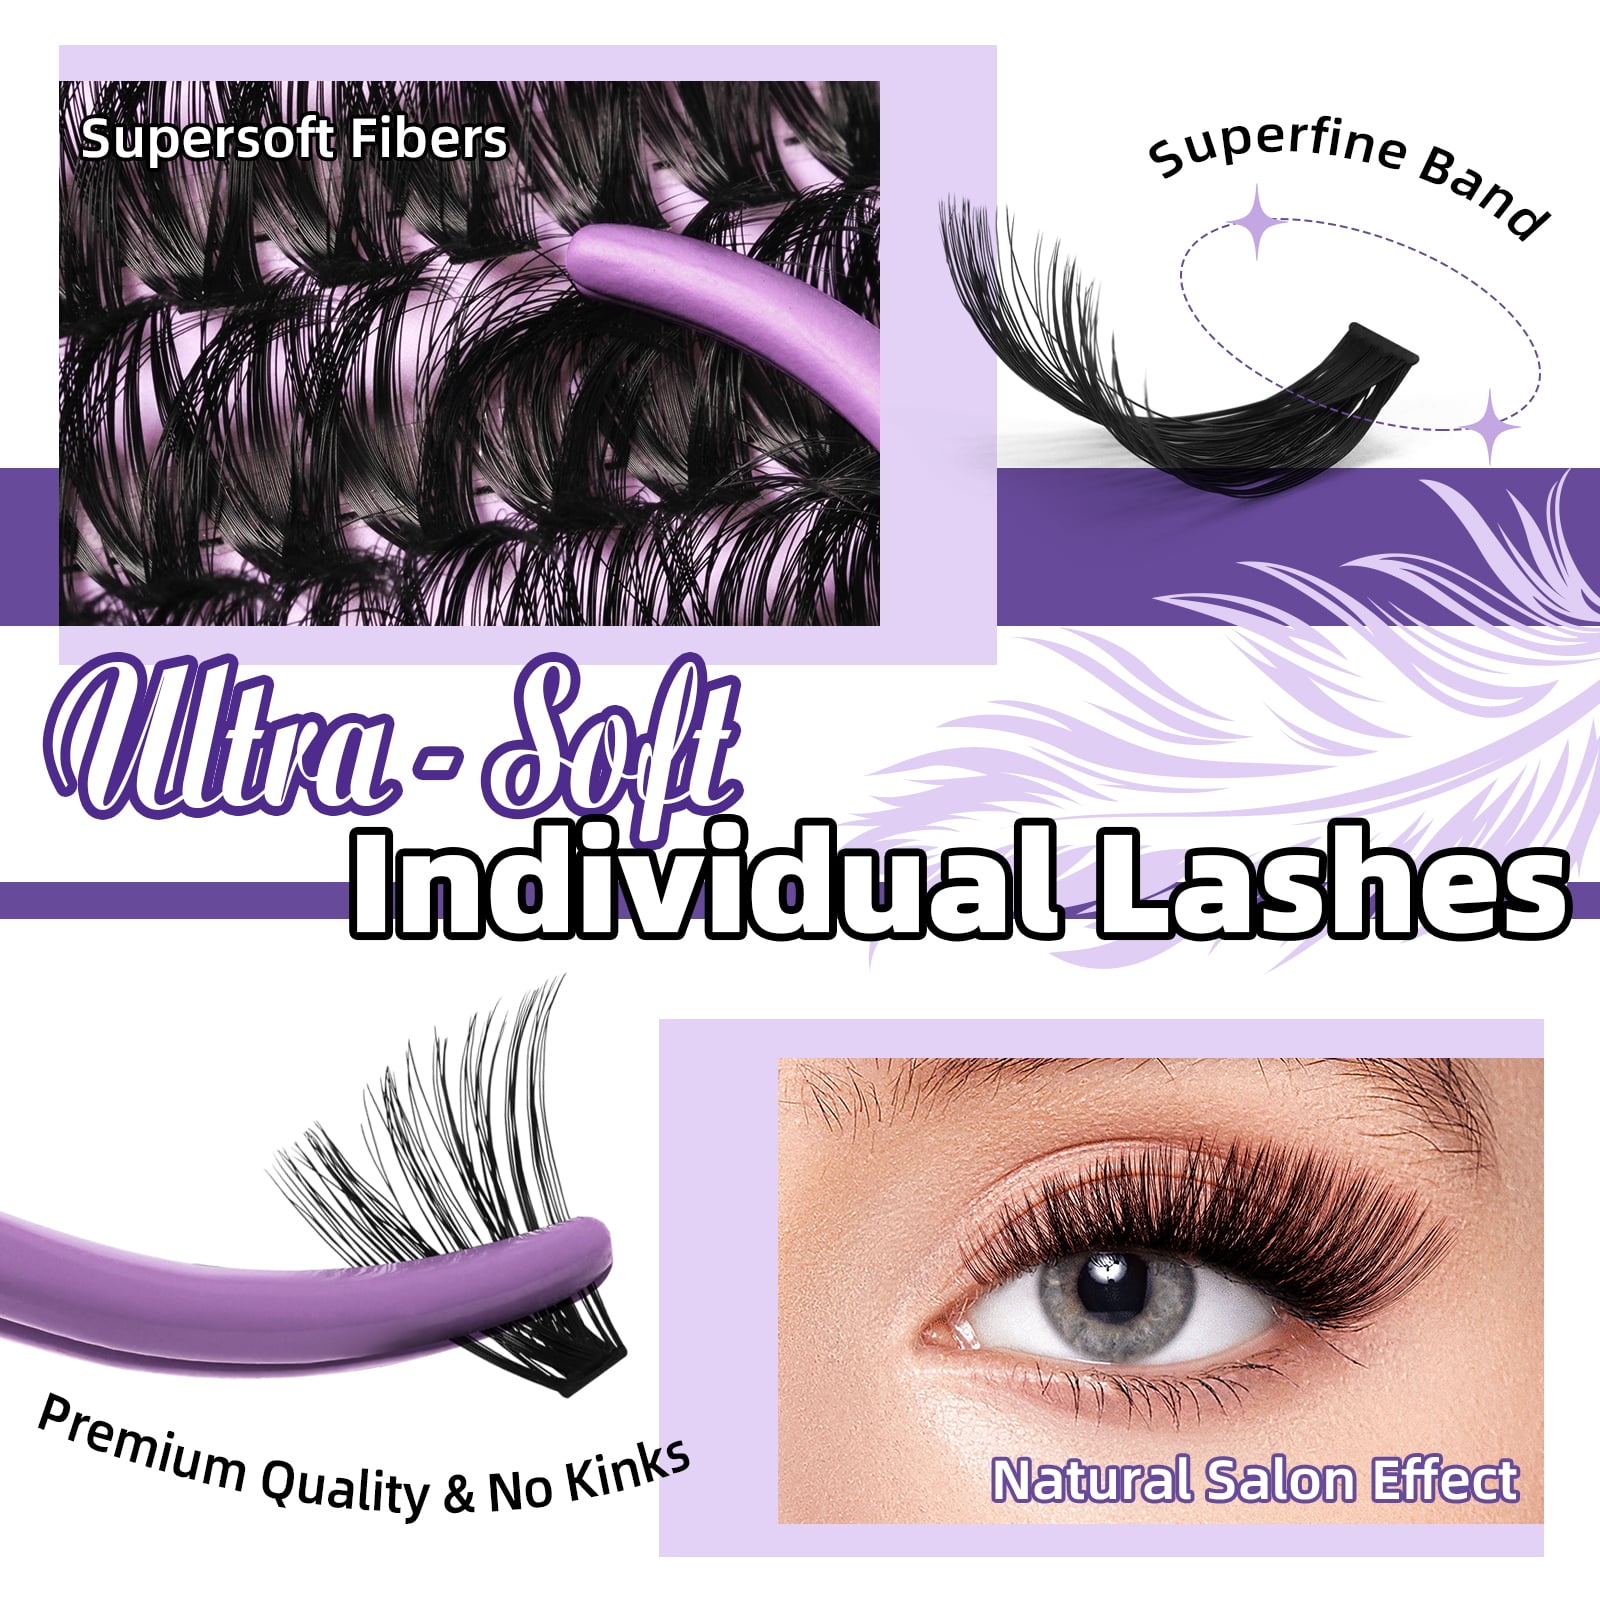 B&amp;Q Ultra soft individual lashes